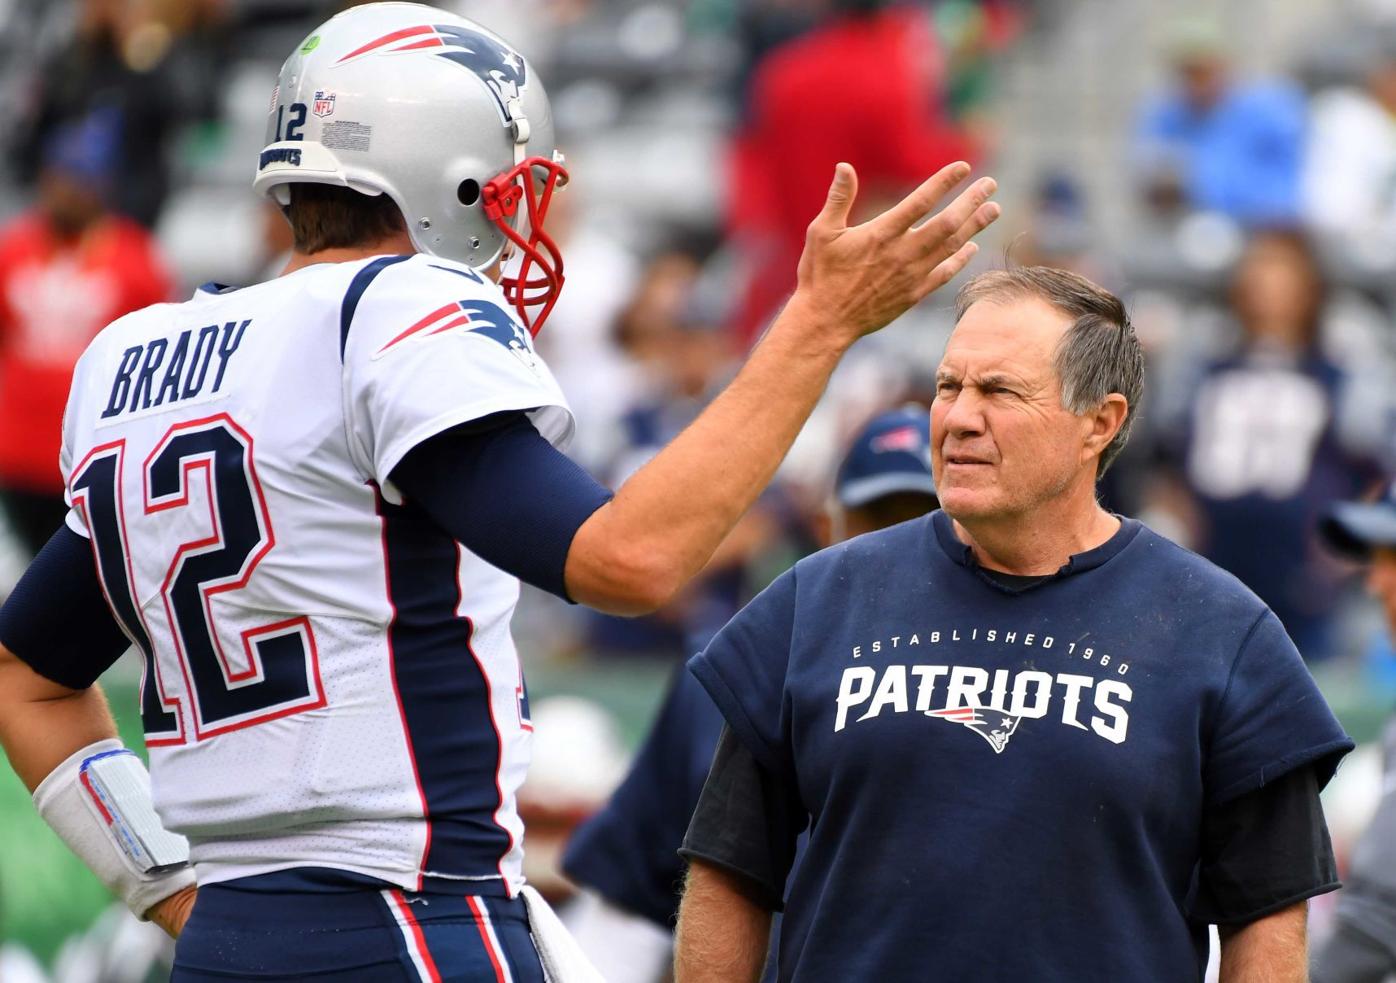 A lot of mediocrity': Tom Brady criticizes level of NFL play